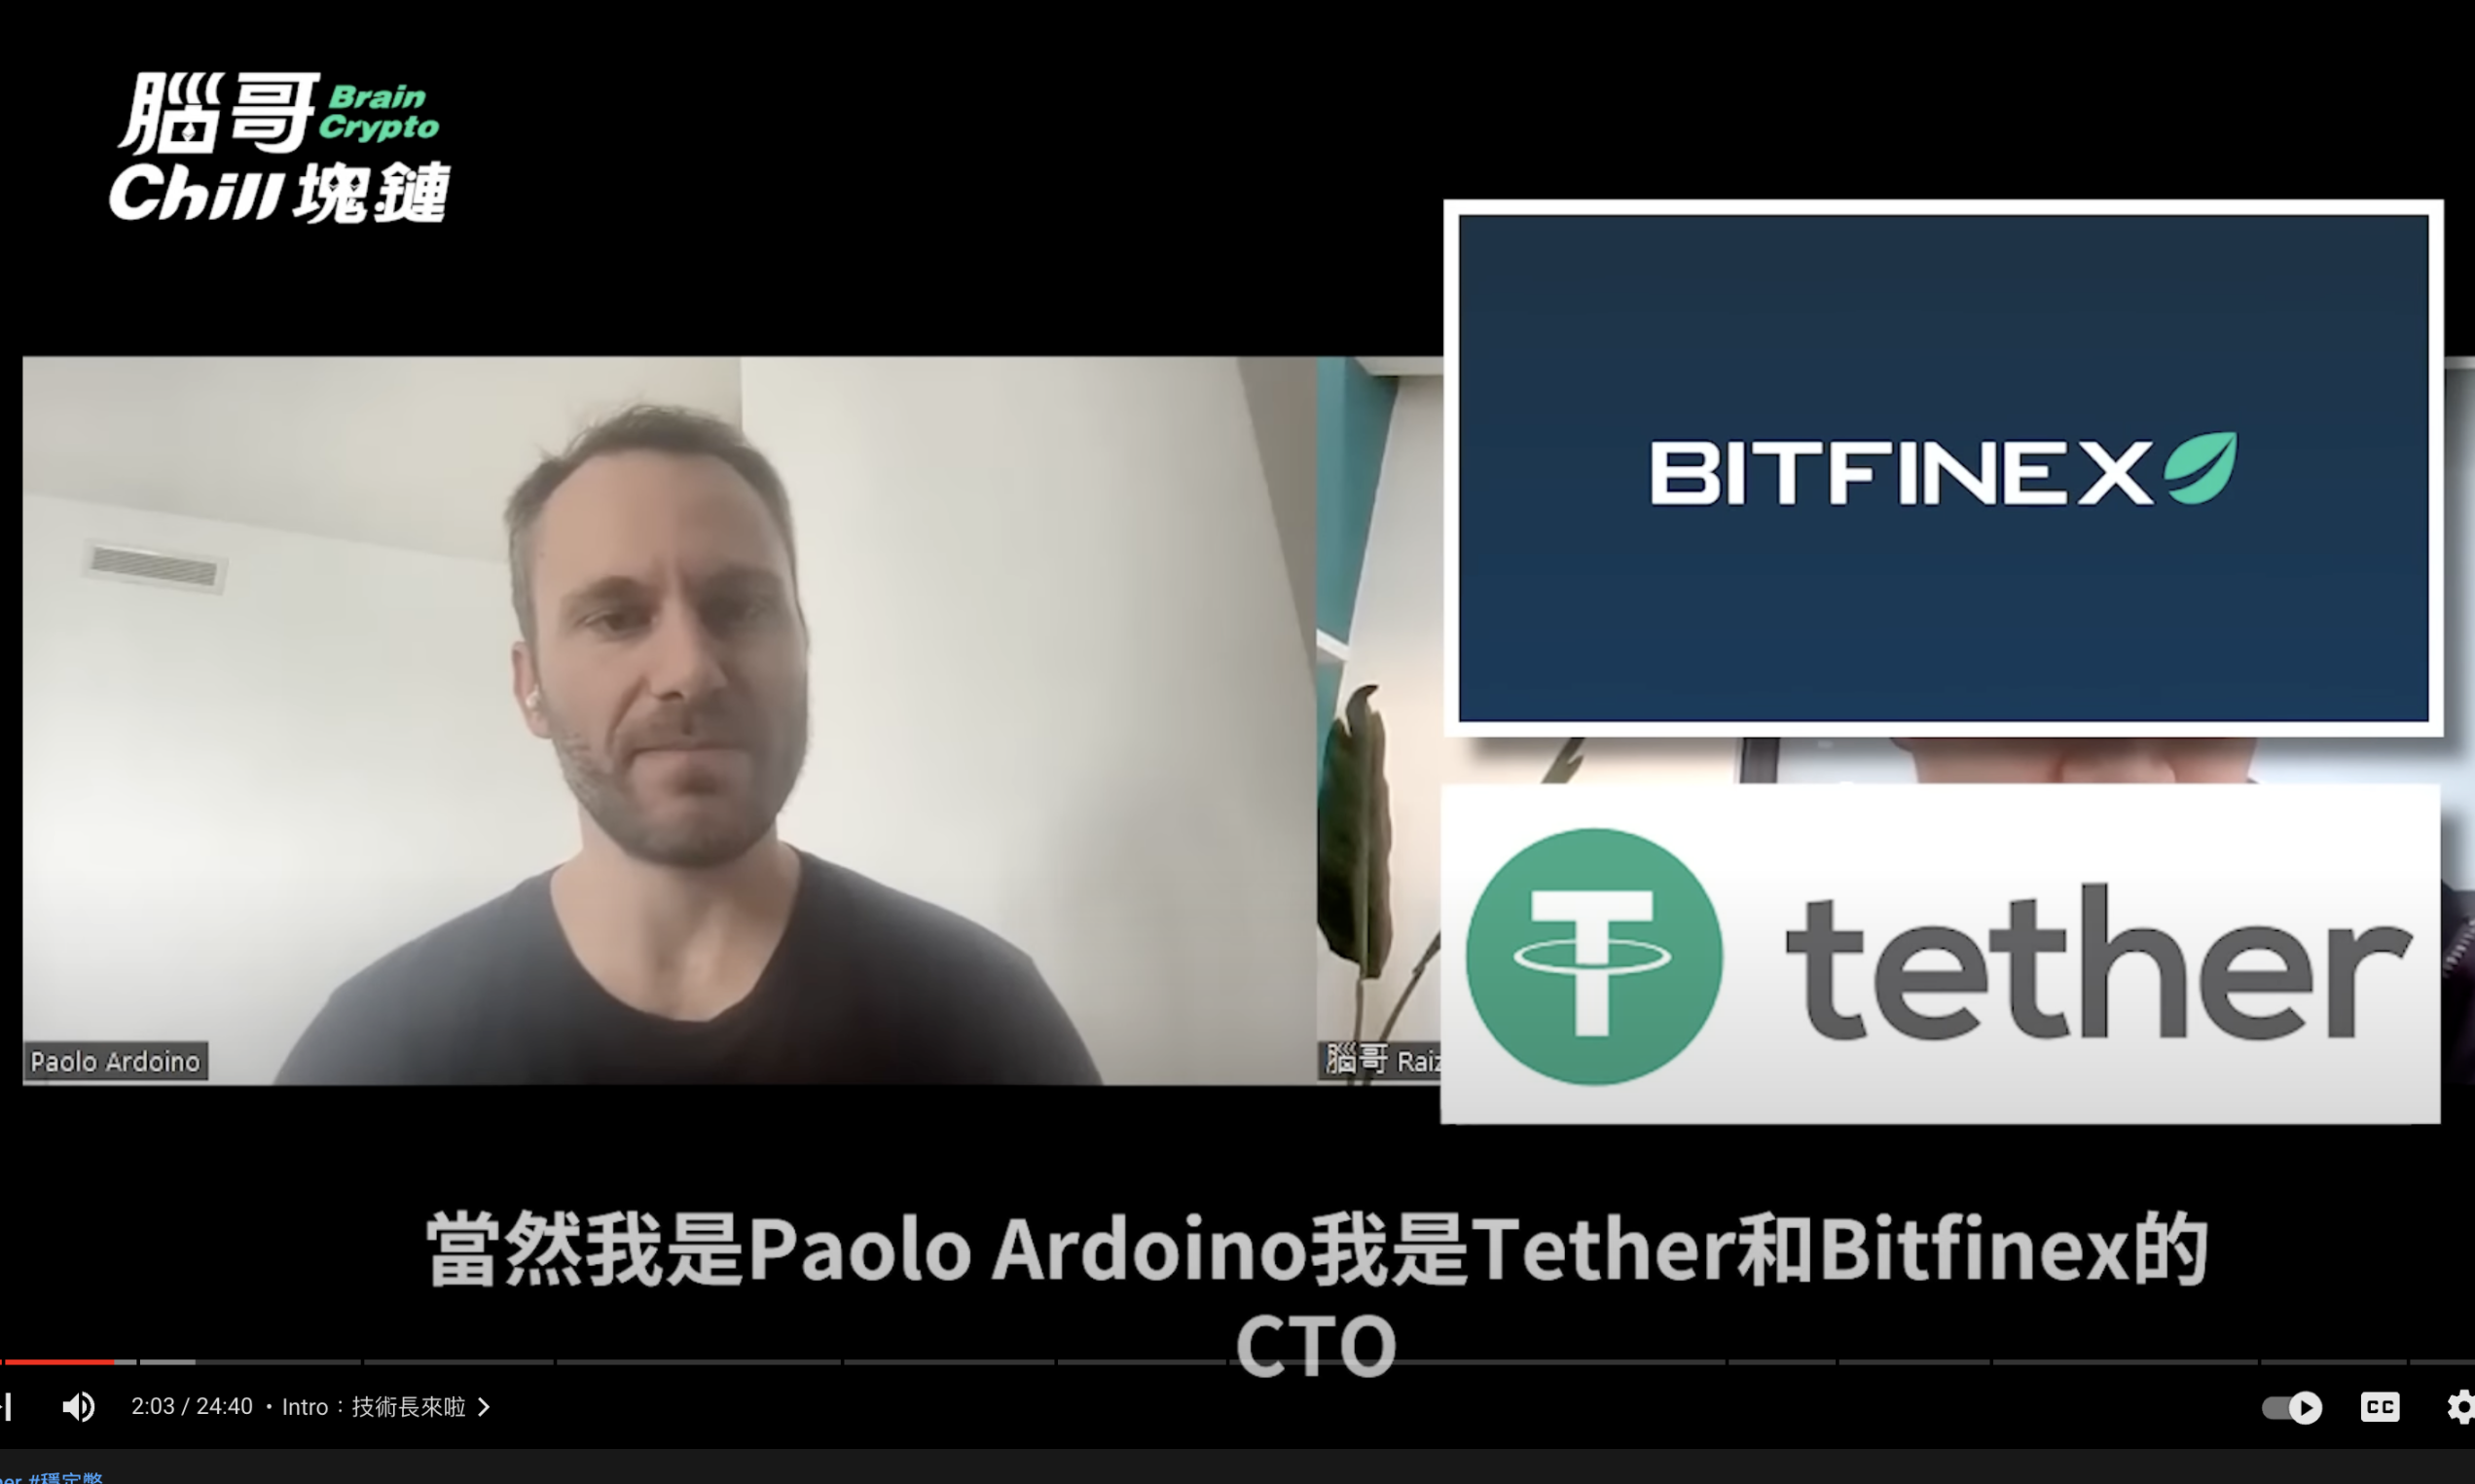 Paolo Ardoino - CTO @ Tether & Bitfinex